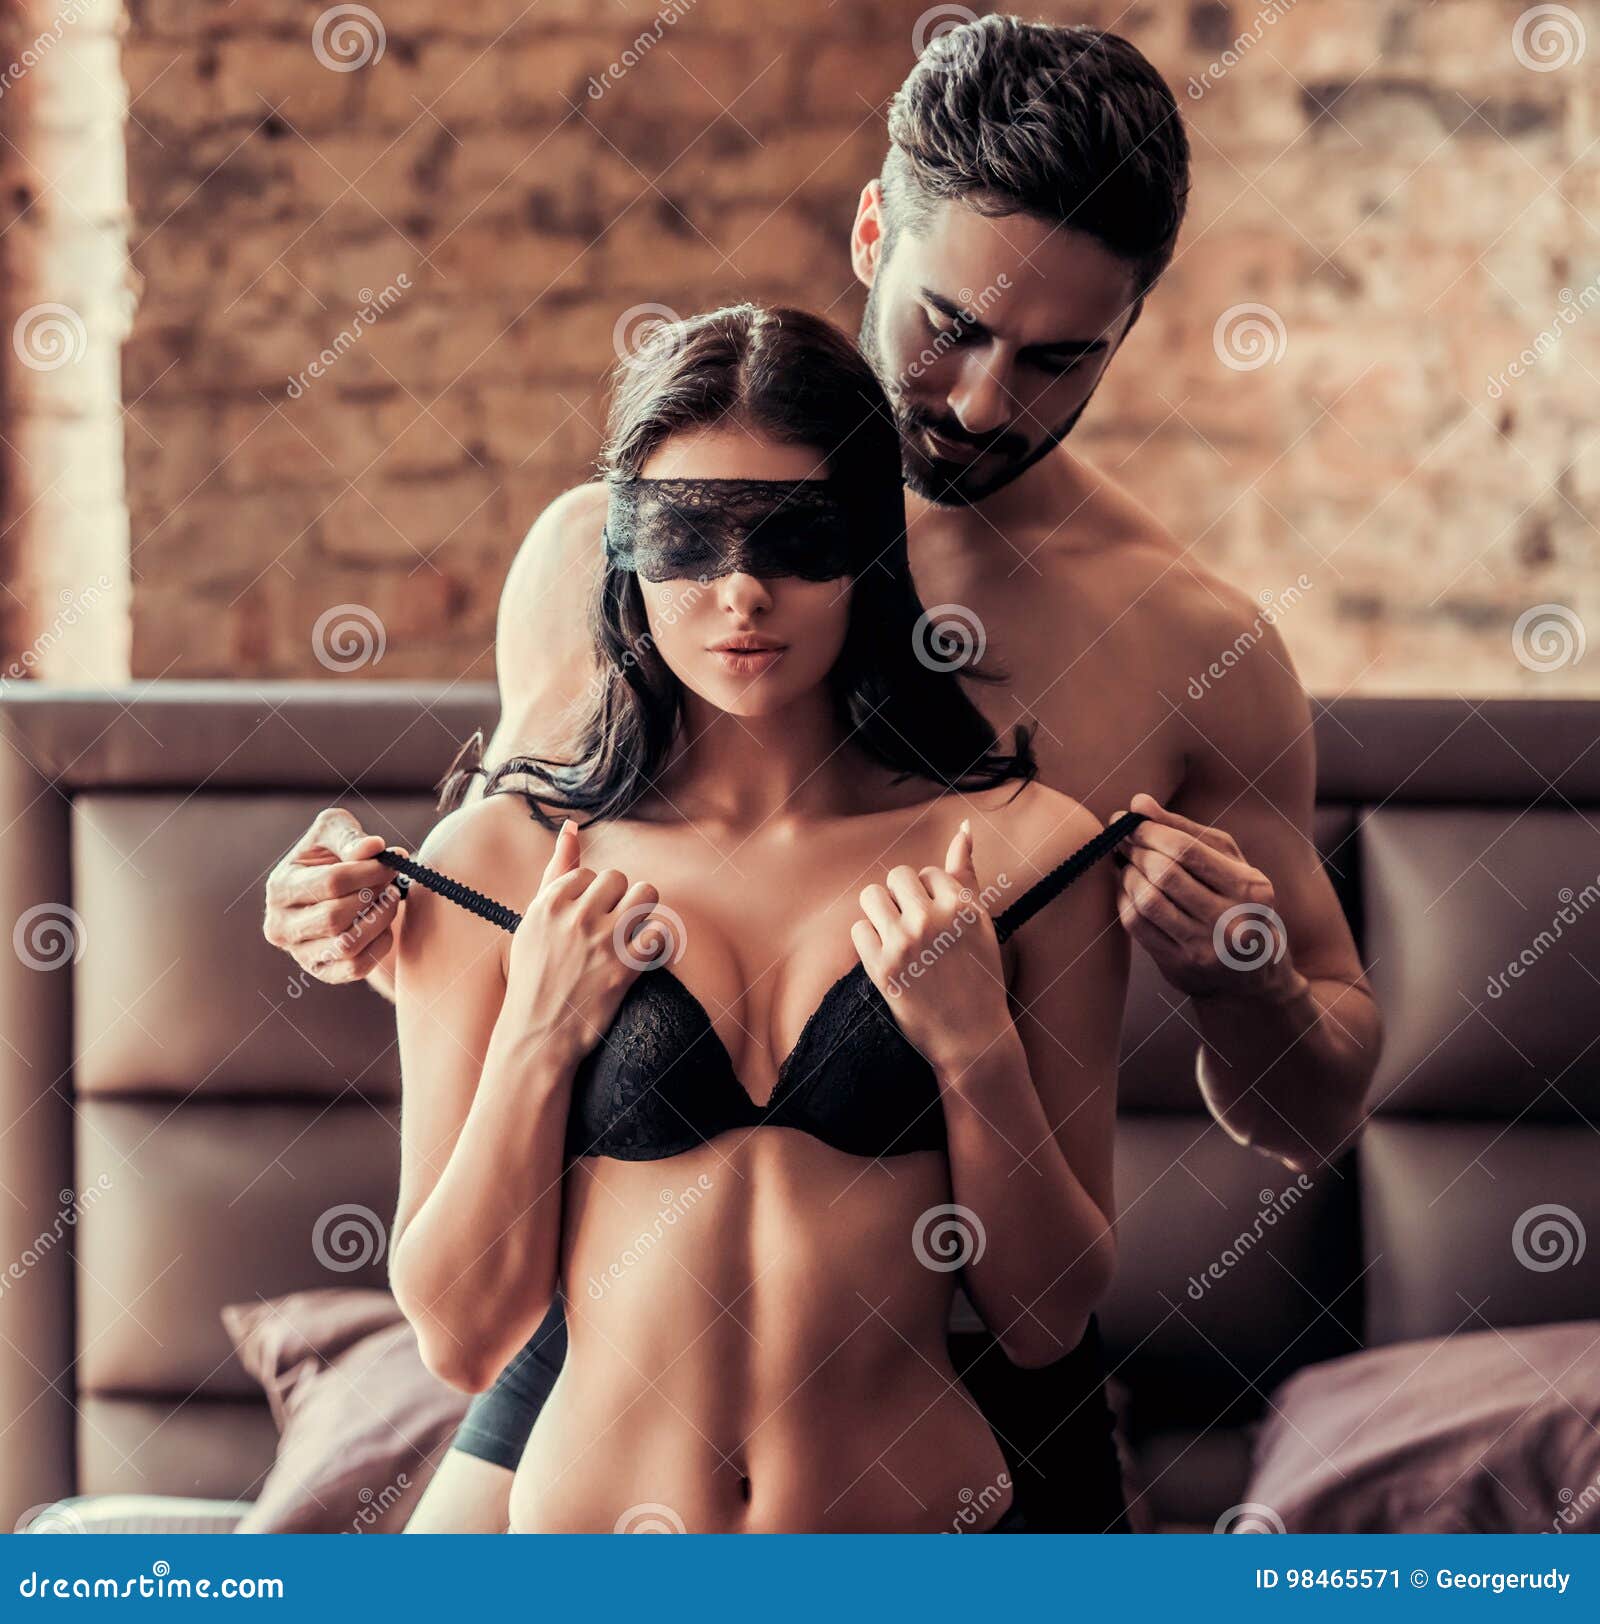 Couple having sex stock image. Image of caucasian, boyfriend